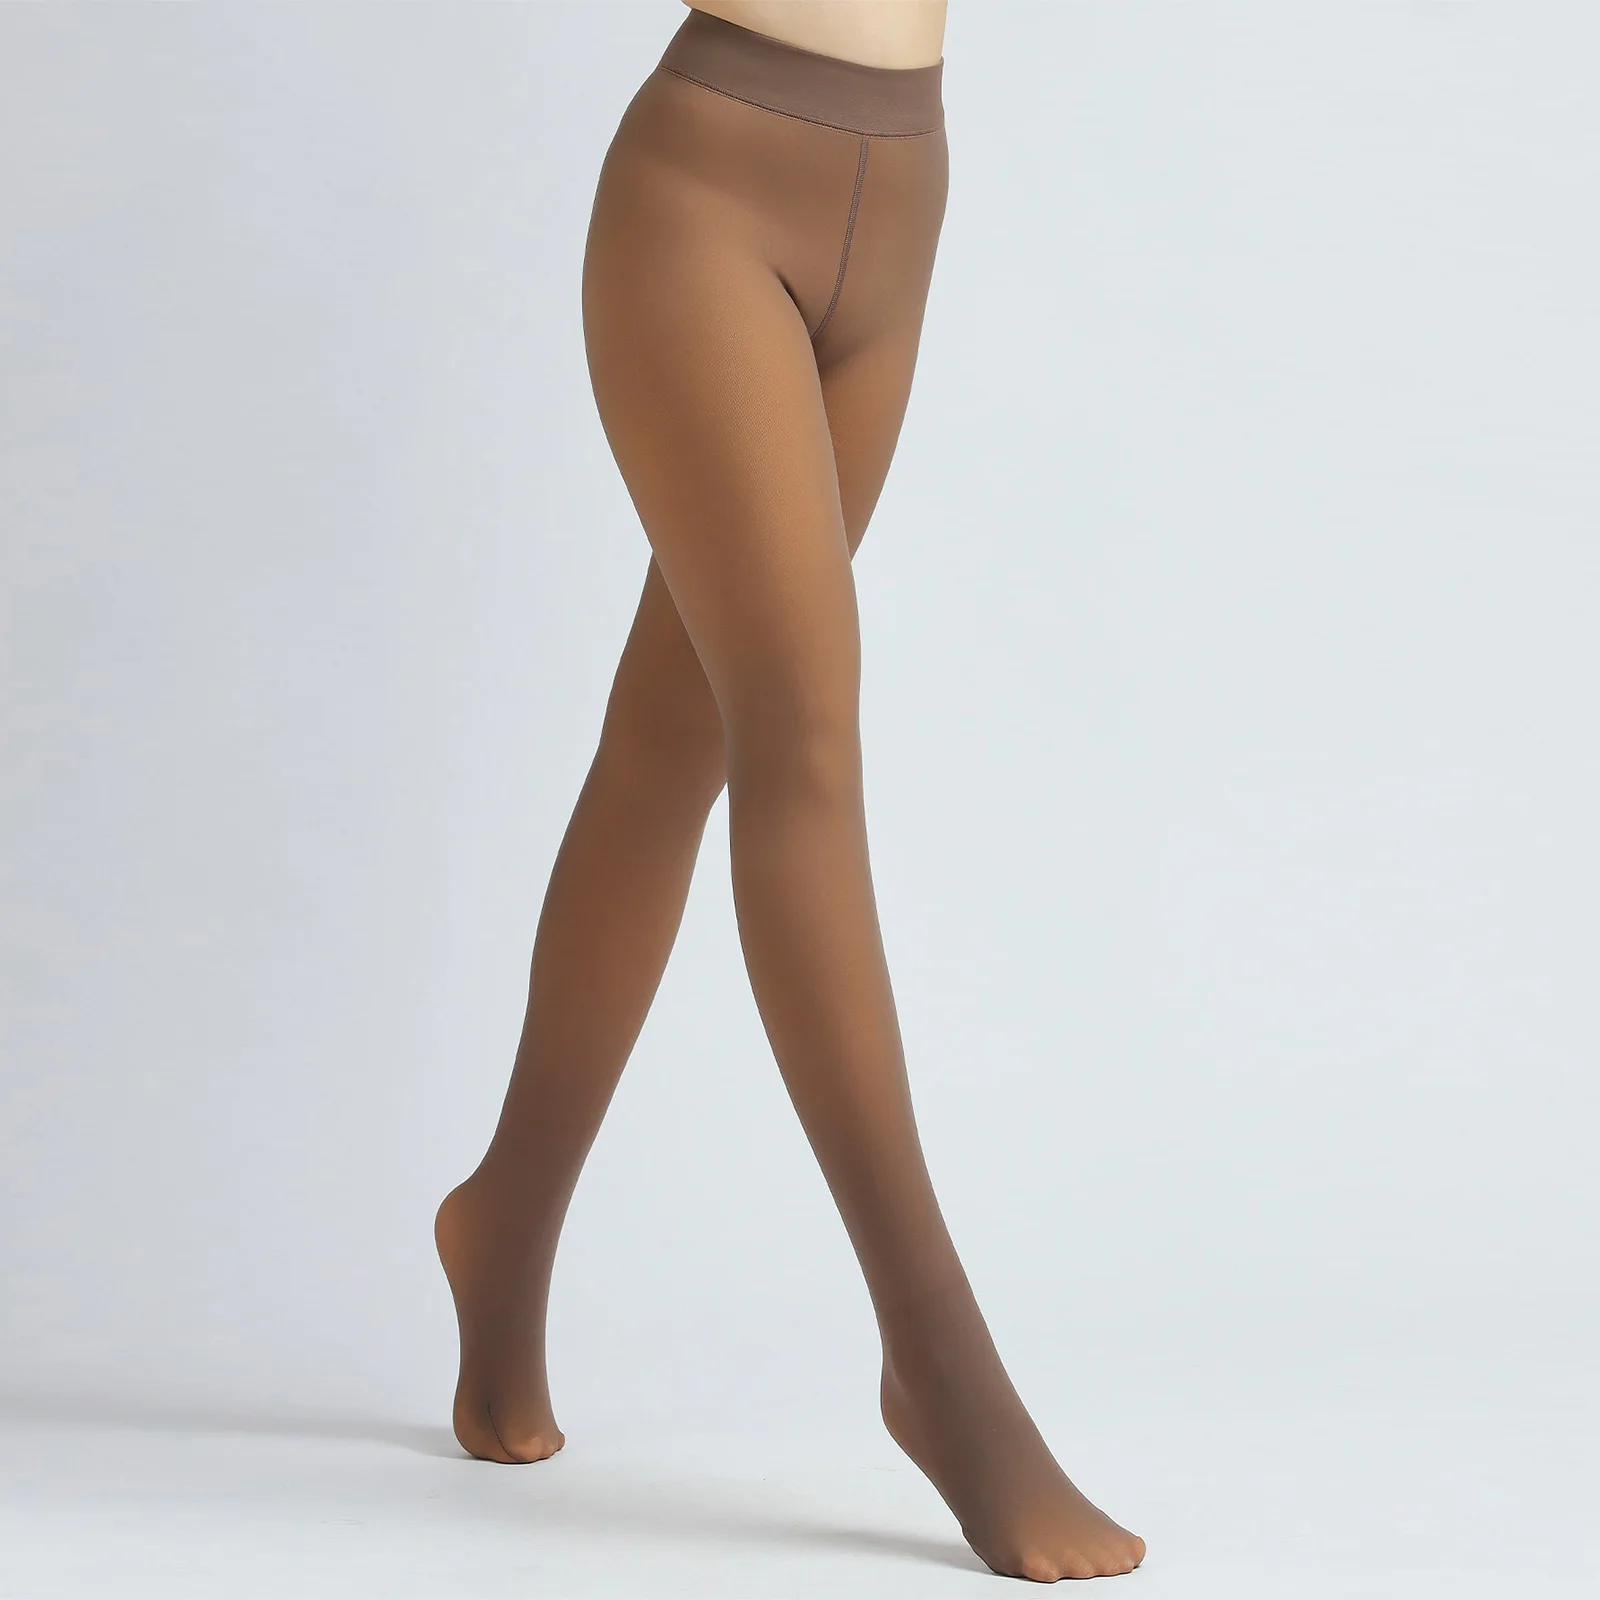 Fleece Pantyhose Keep Warm Skin Translucent Stockings Pantyhose Leggings Winter Leg Translucent Keep Warm For Ladies